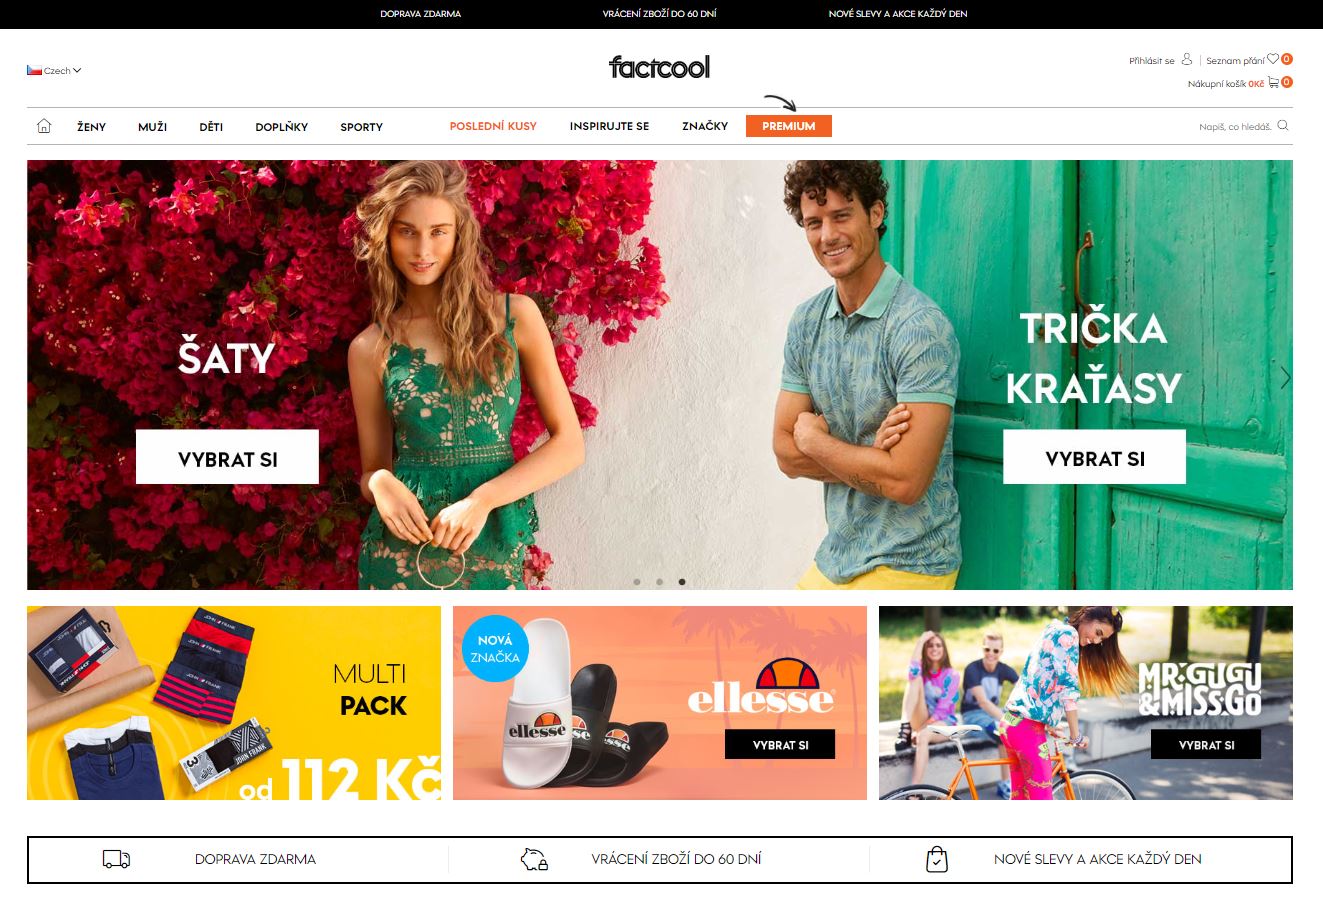 Online store factcool.com